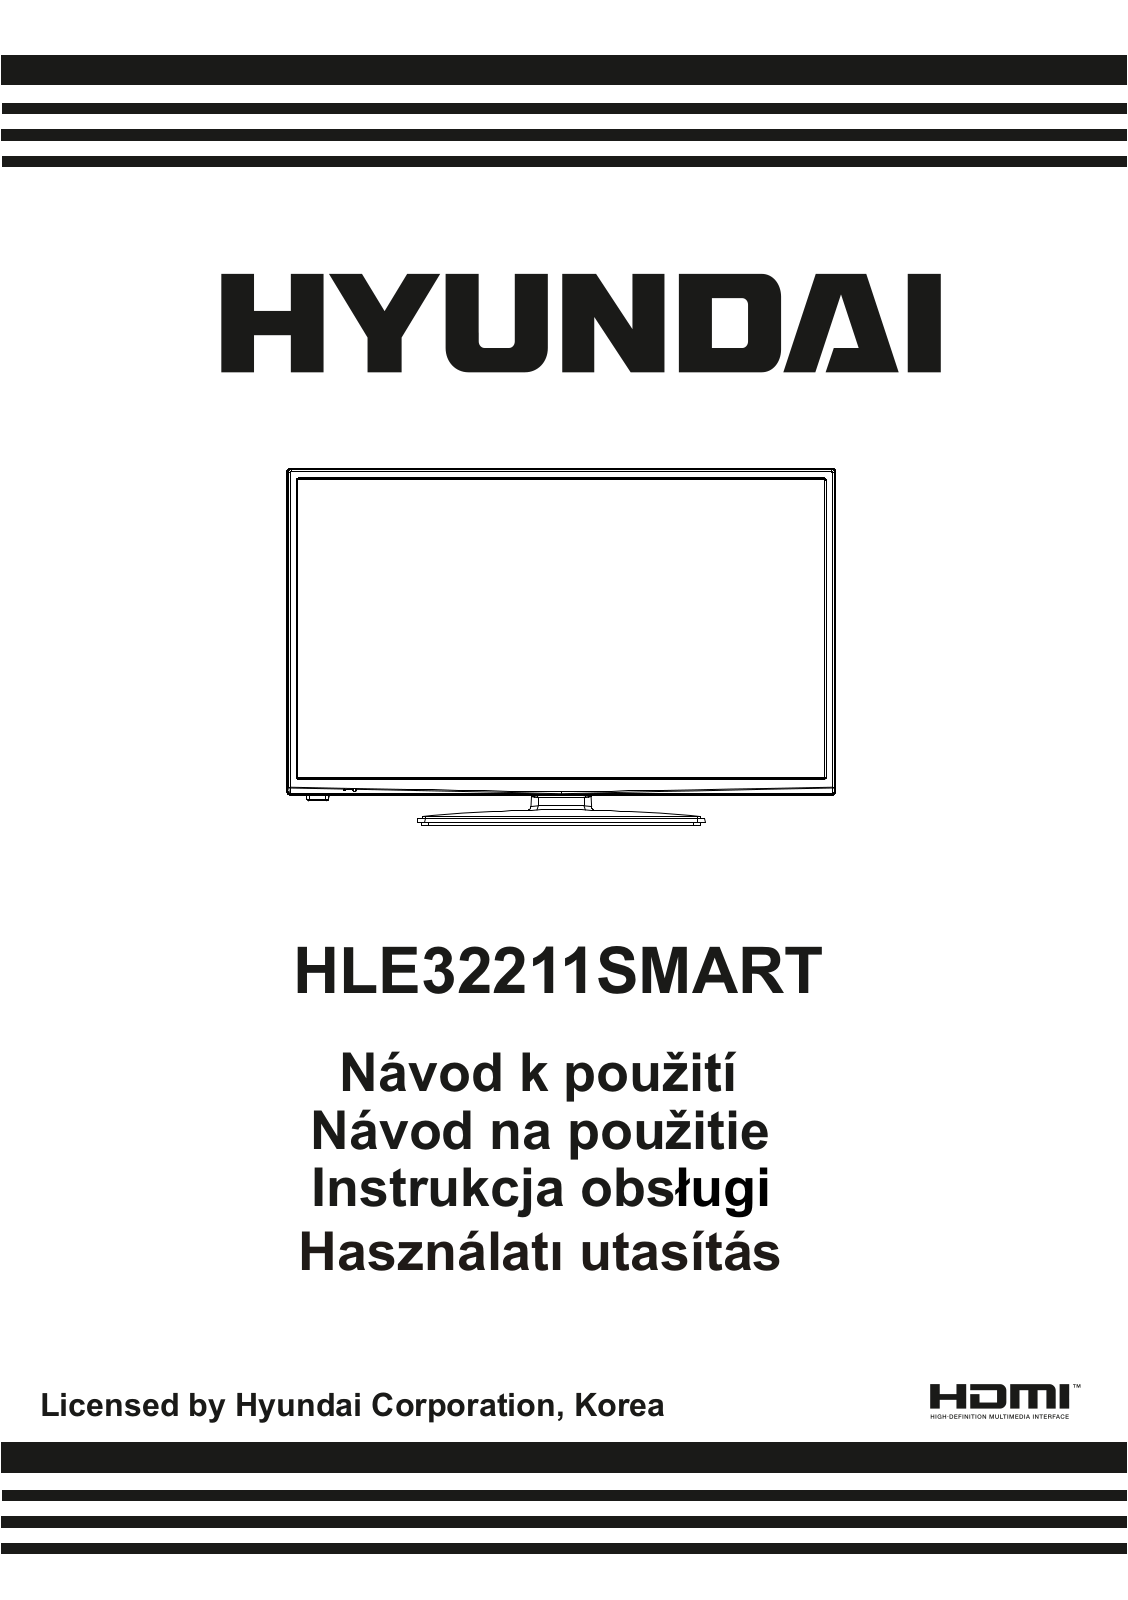 Hyundai HLE 32211 SMART User Manual